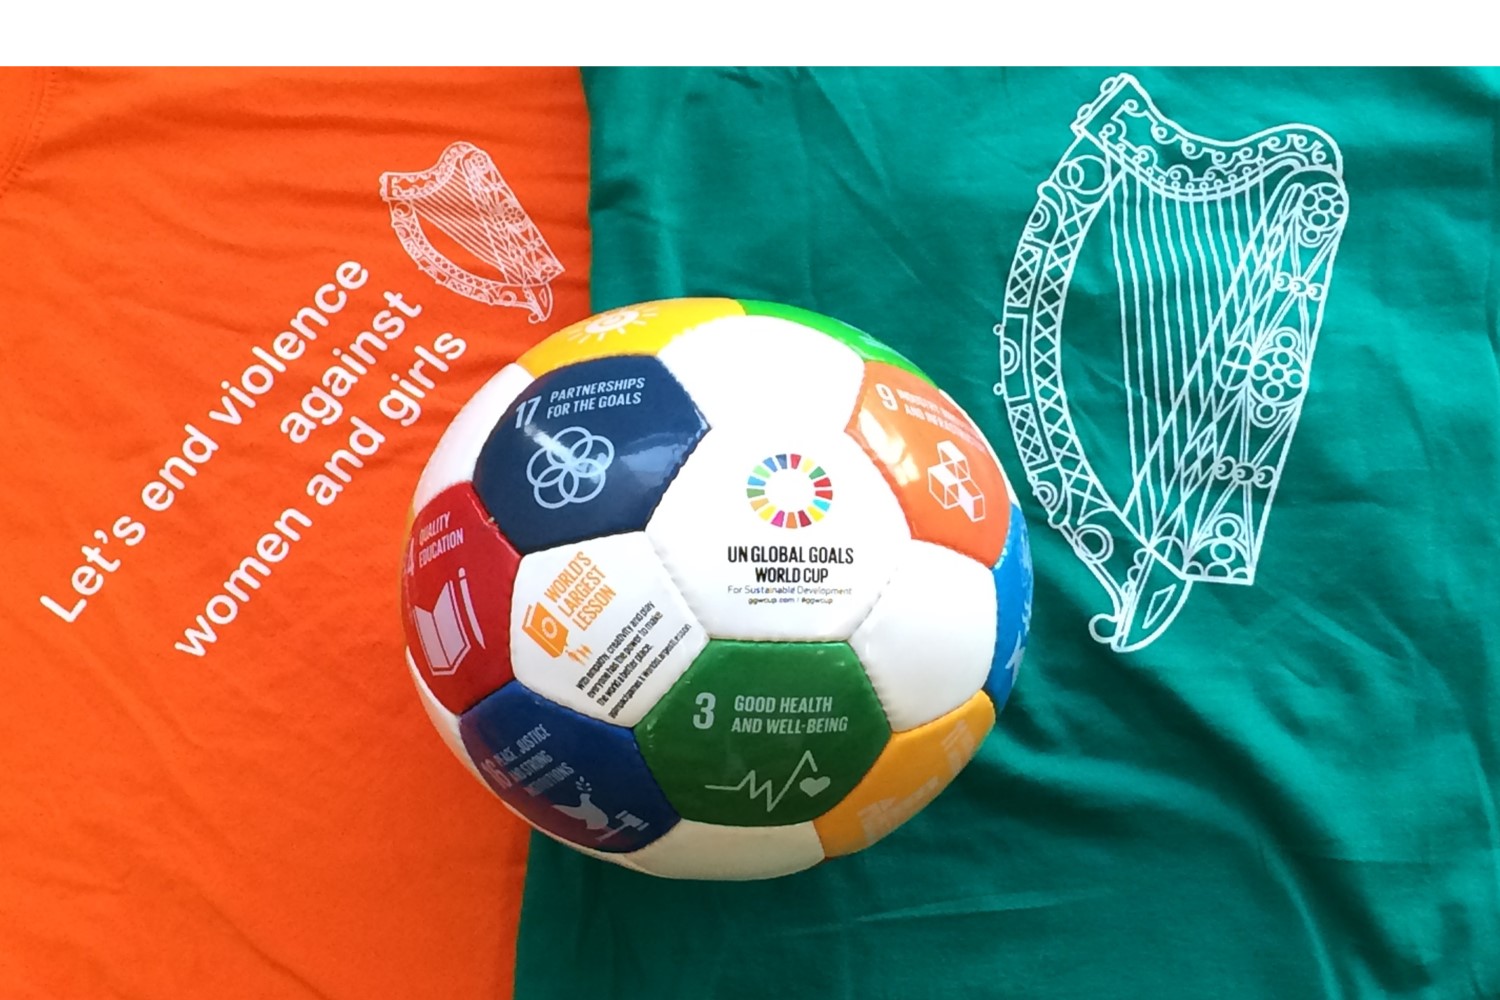 Global Goals World Cup 2018 - Raising Awareness of the Sustainable Development Goals through Sport